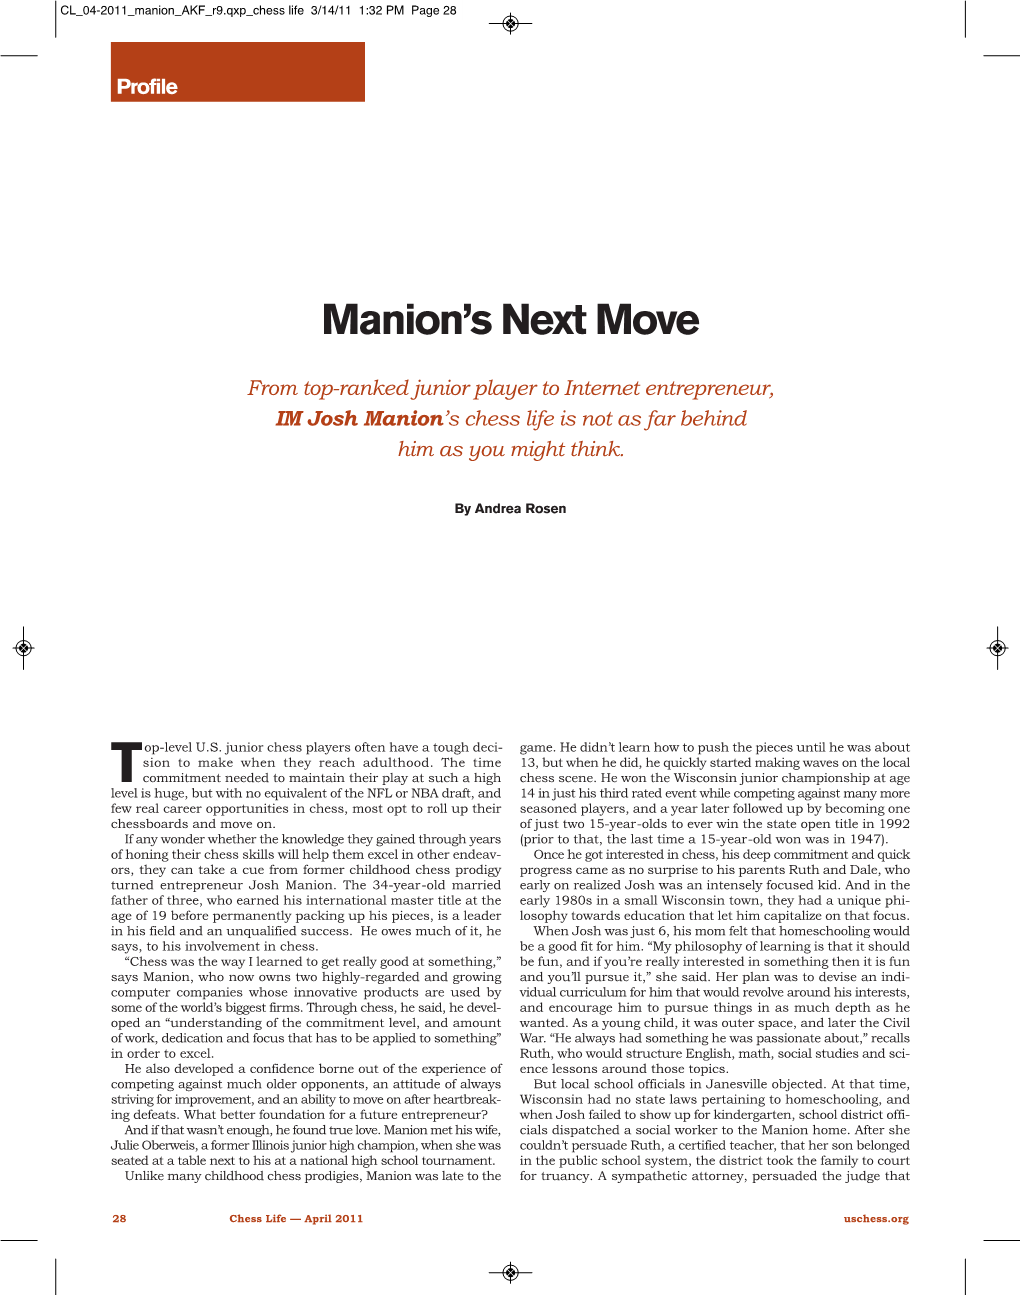 Manion's Next Move